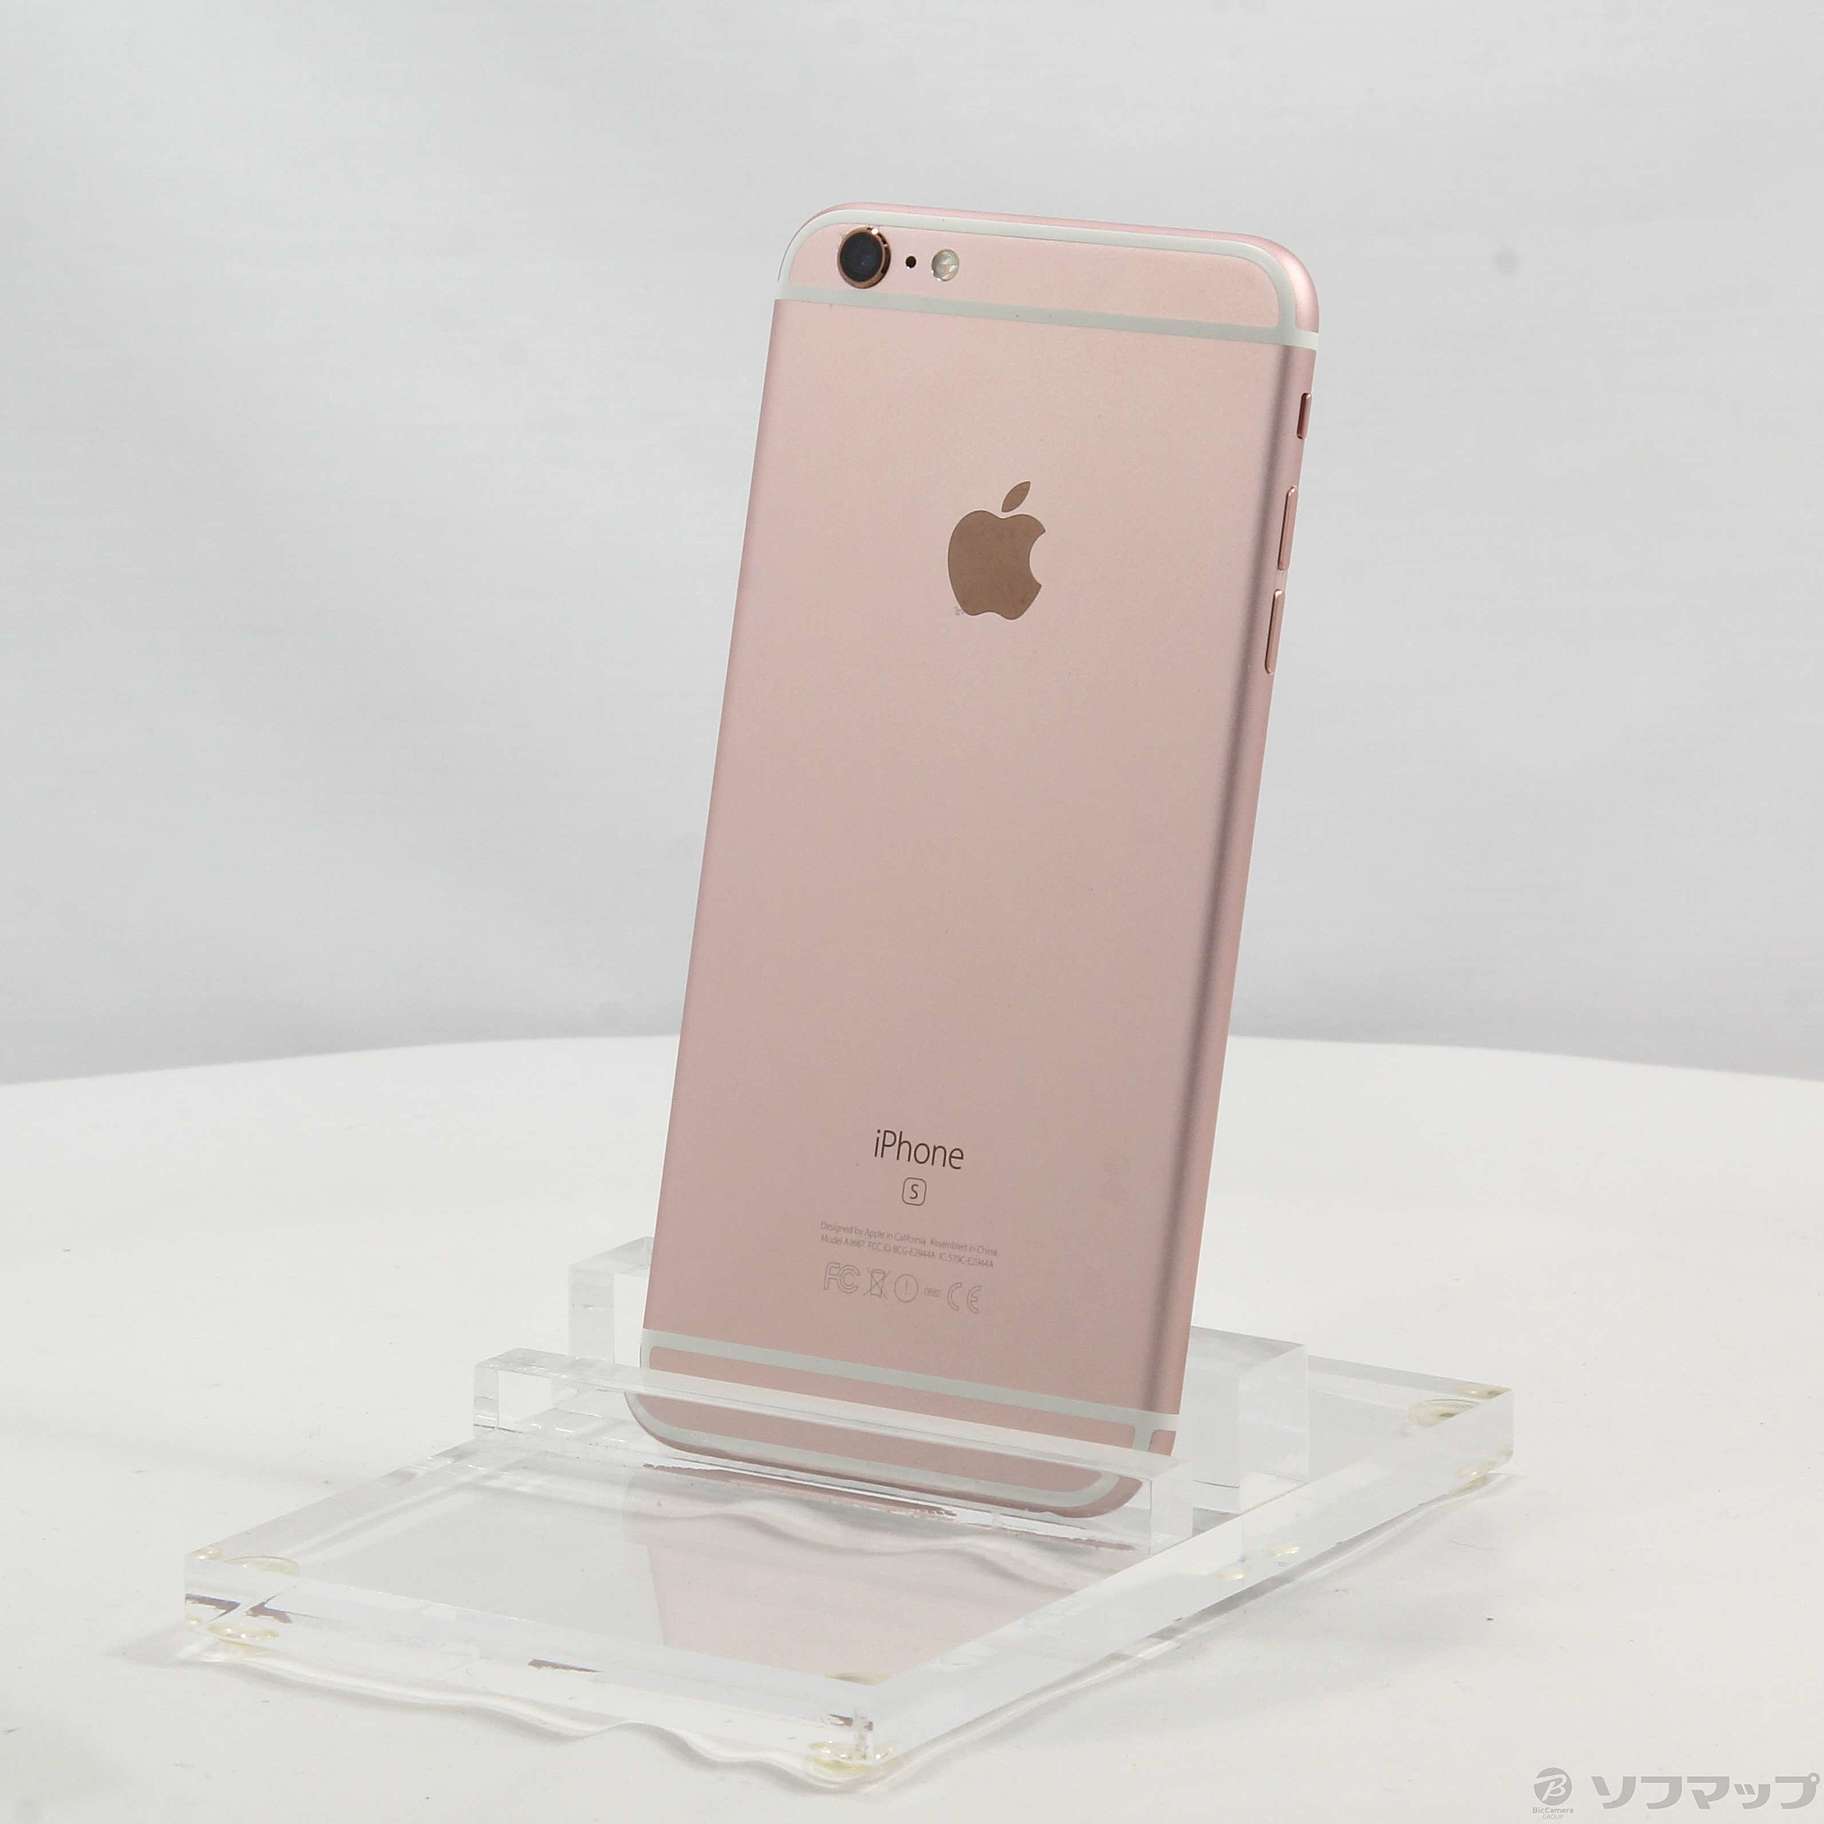 65%OFF!】 iPhone 6s Plus Gold 128 GB SIMフリー ジャンク